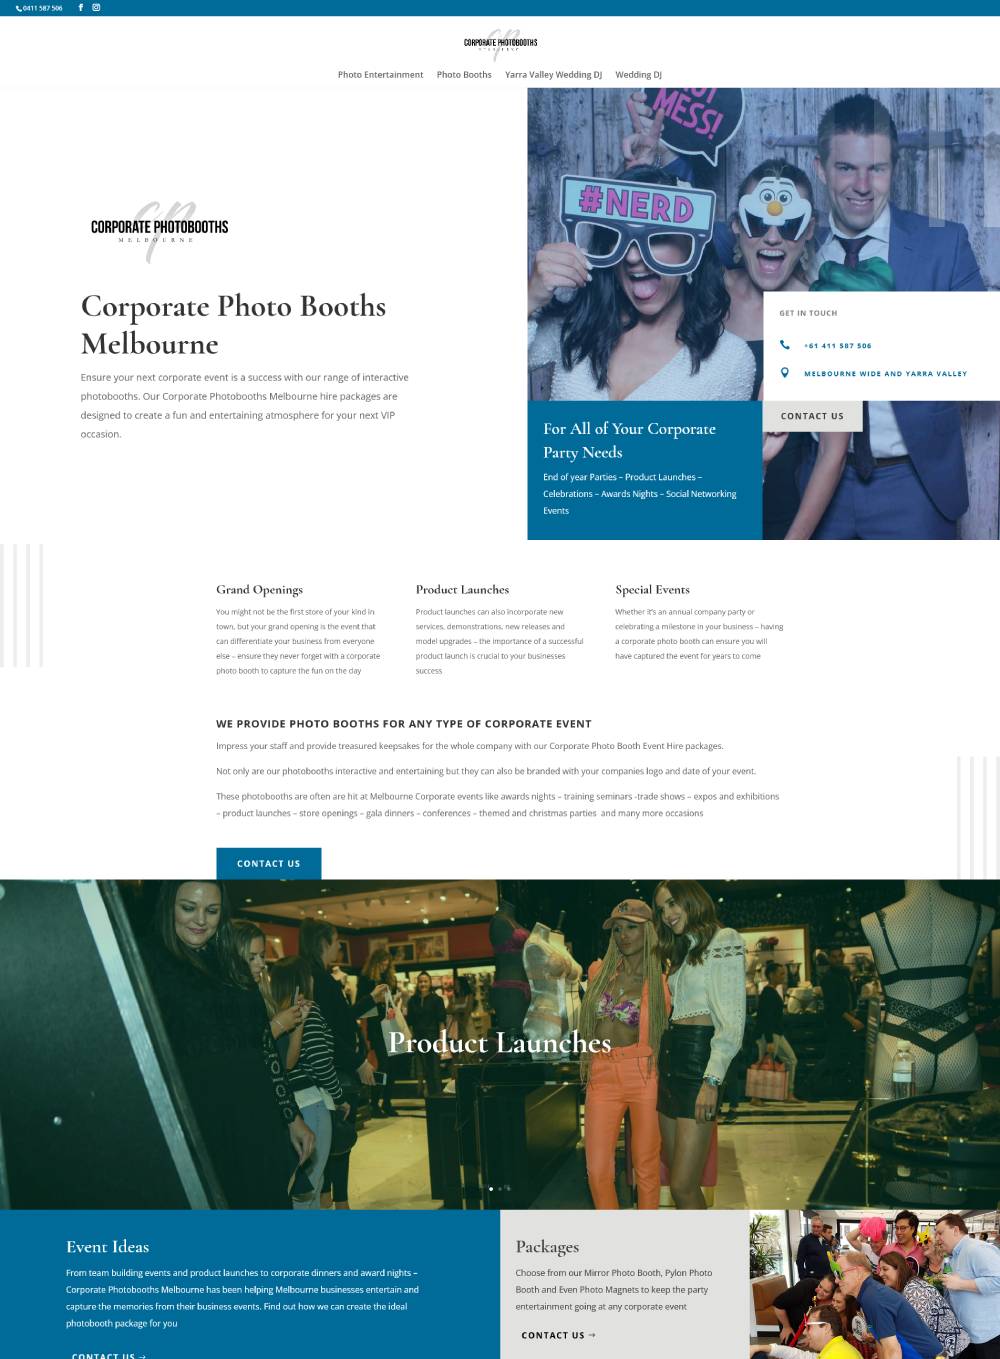 Corporate Photo Booths Melbourne - Website Design Melbourne